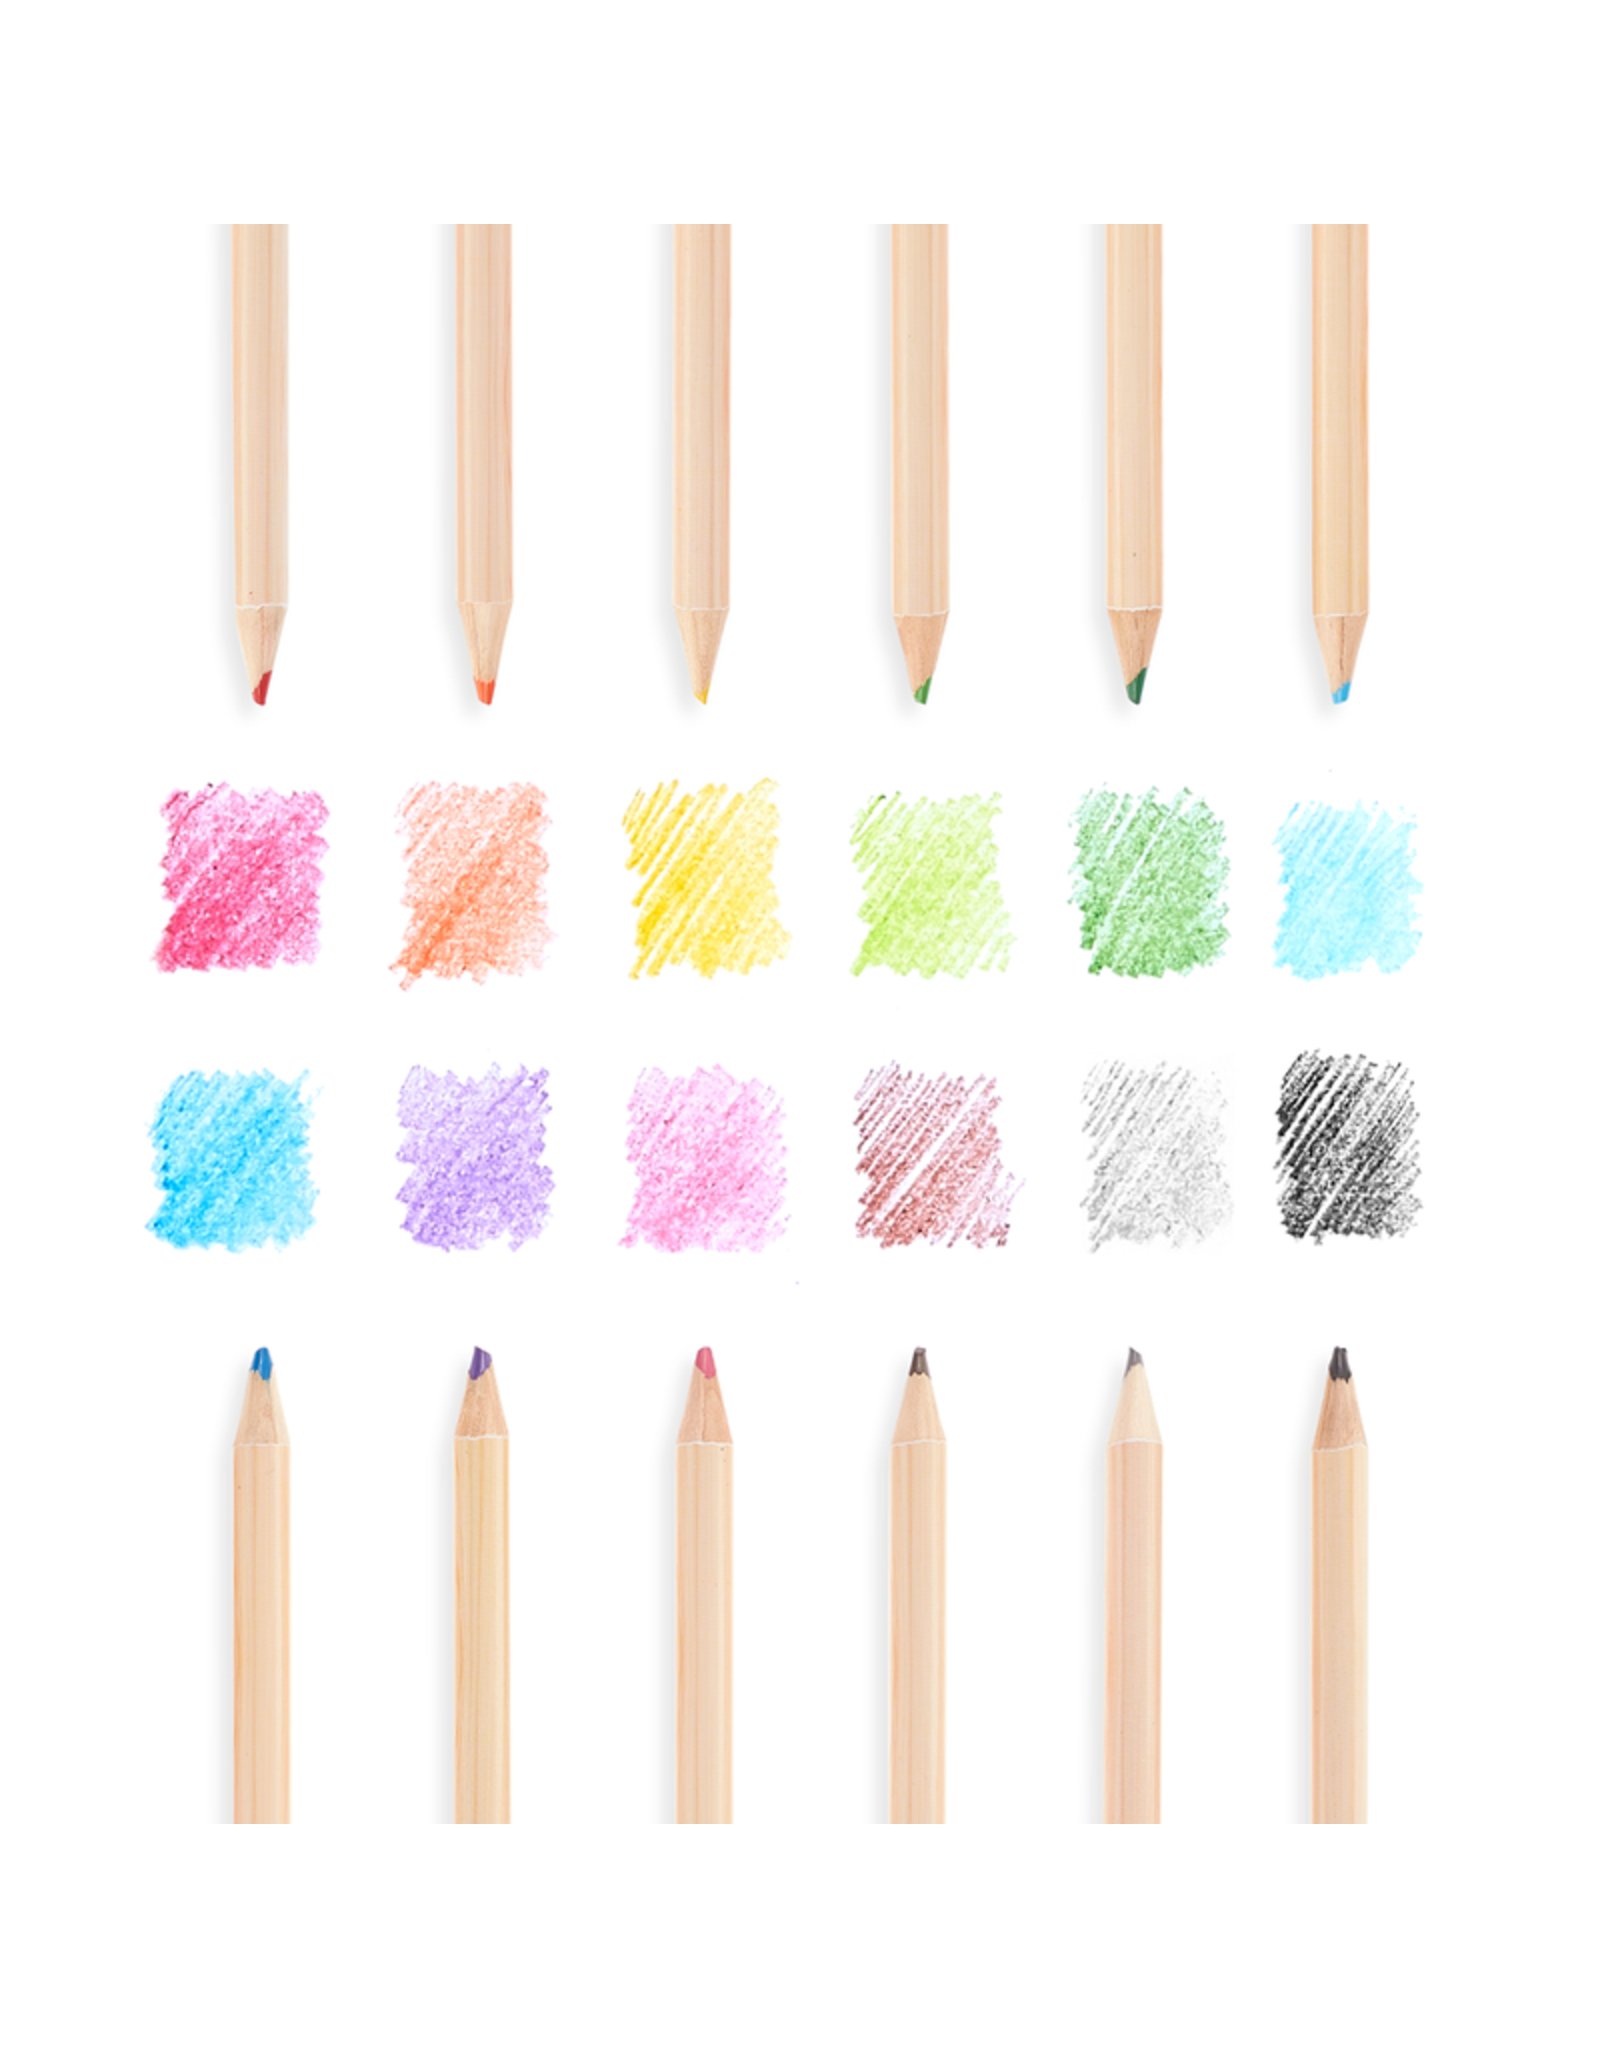 Ooly Un-Mistake-Ables! Erasable Colored Pencils - Set of 12